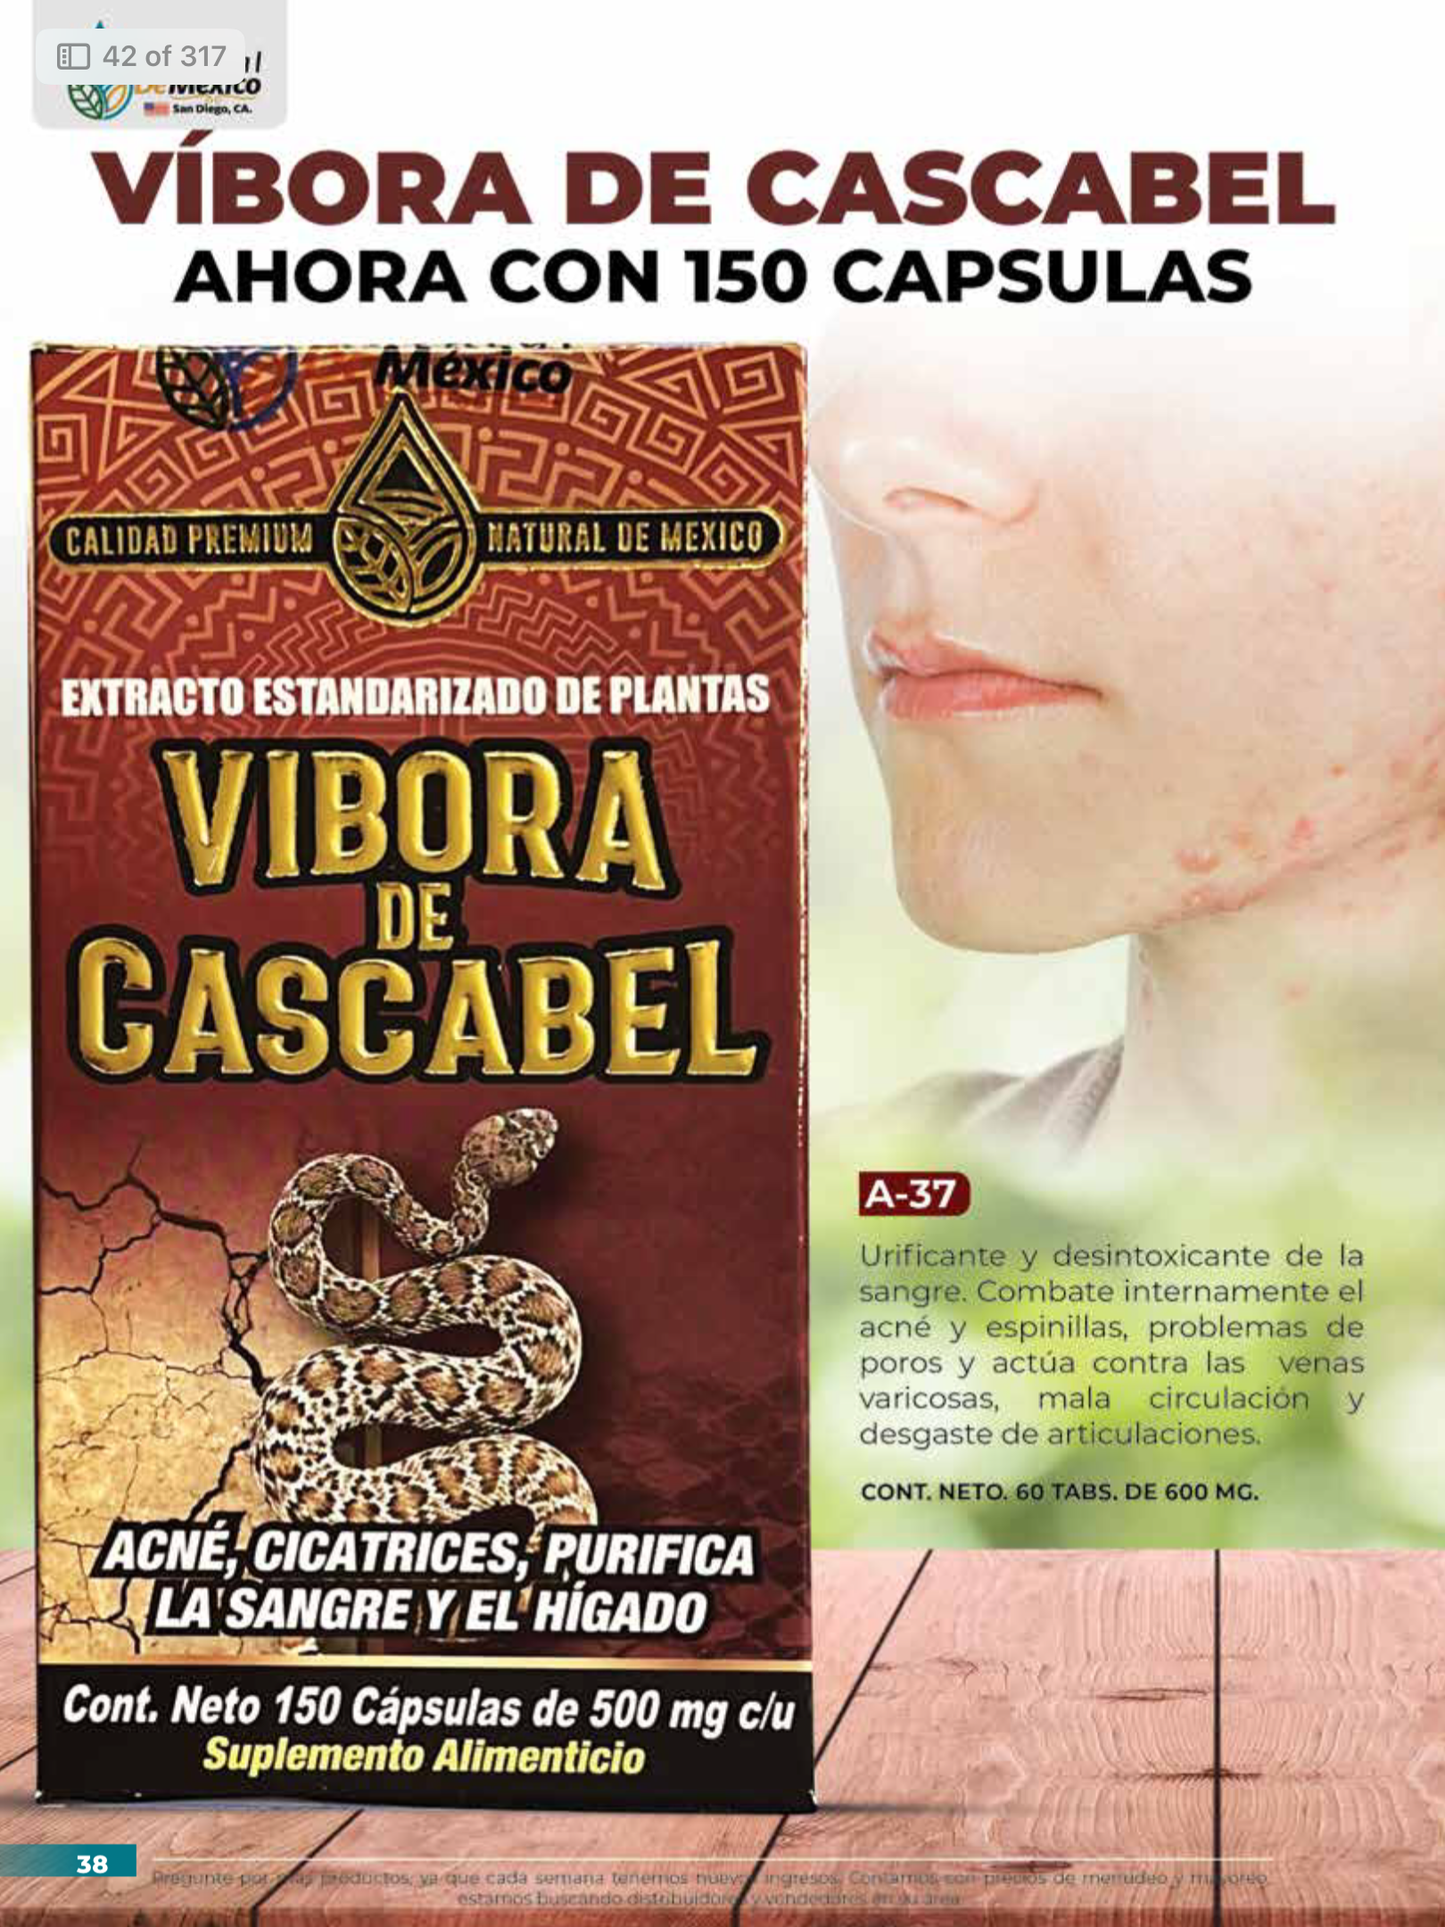 AS-17 Vibora de Cascabel 150 Cap de 500 mg.